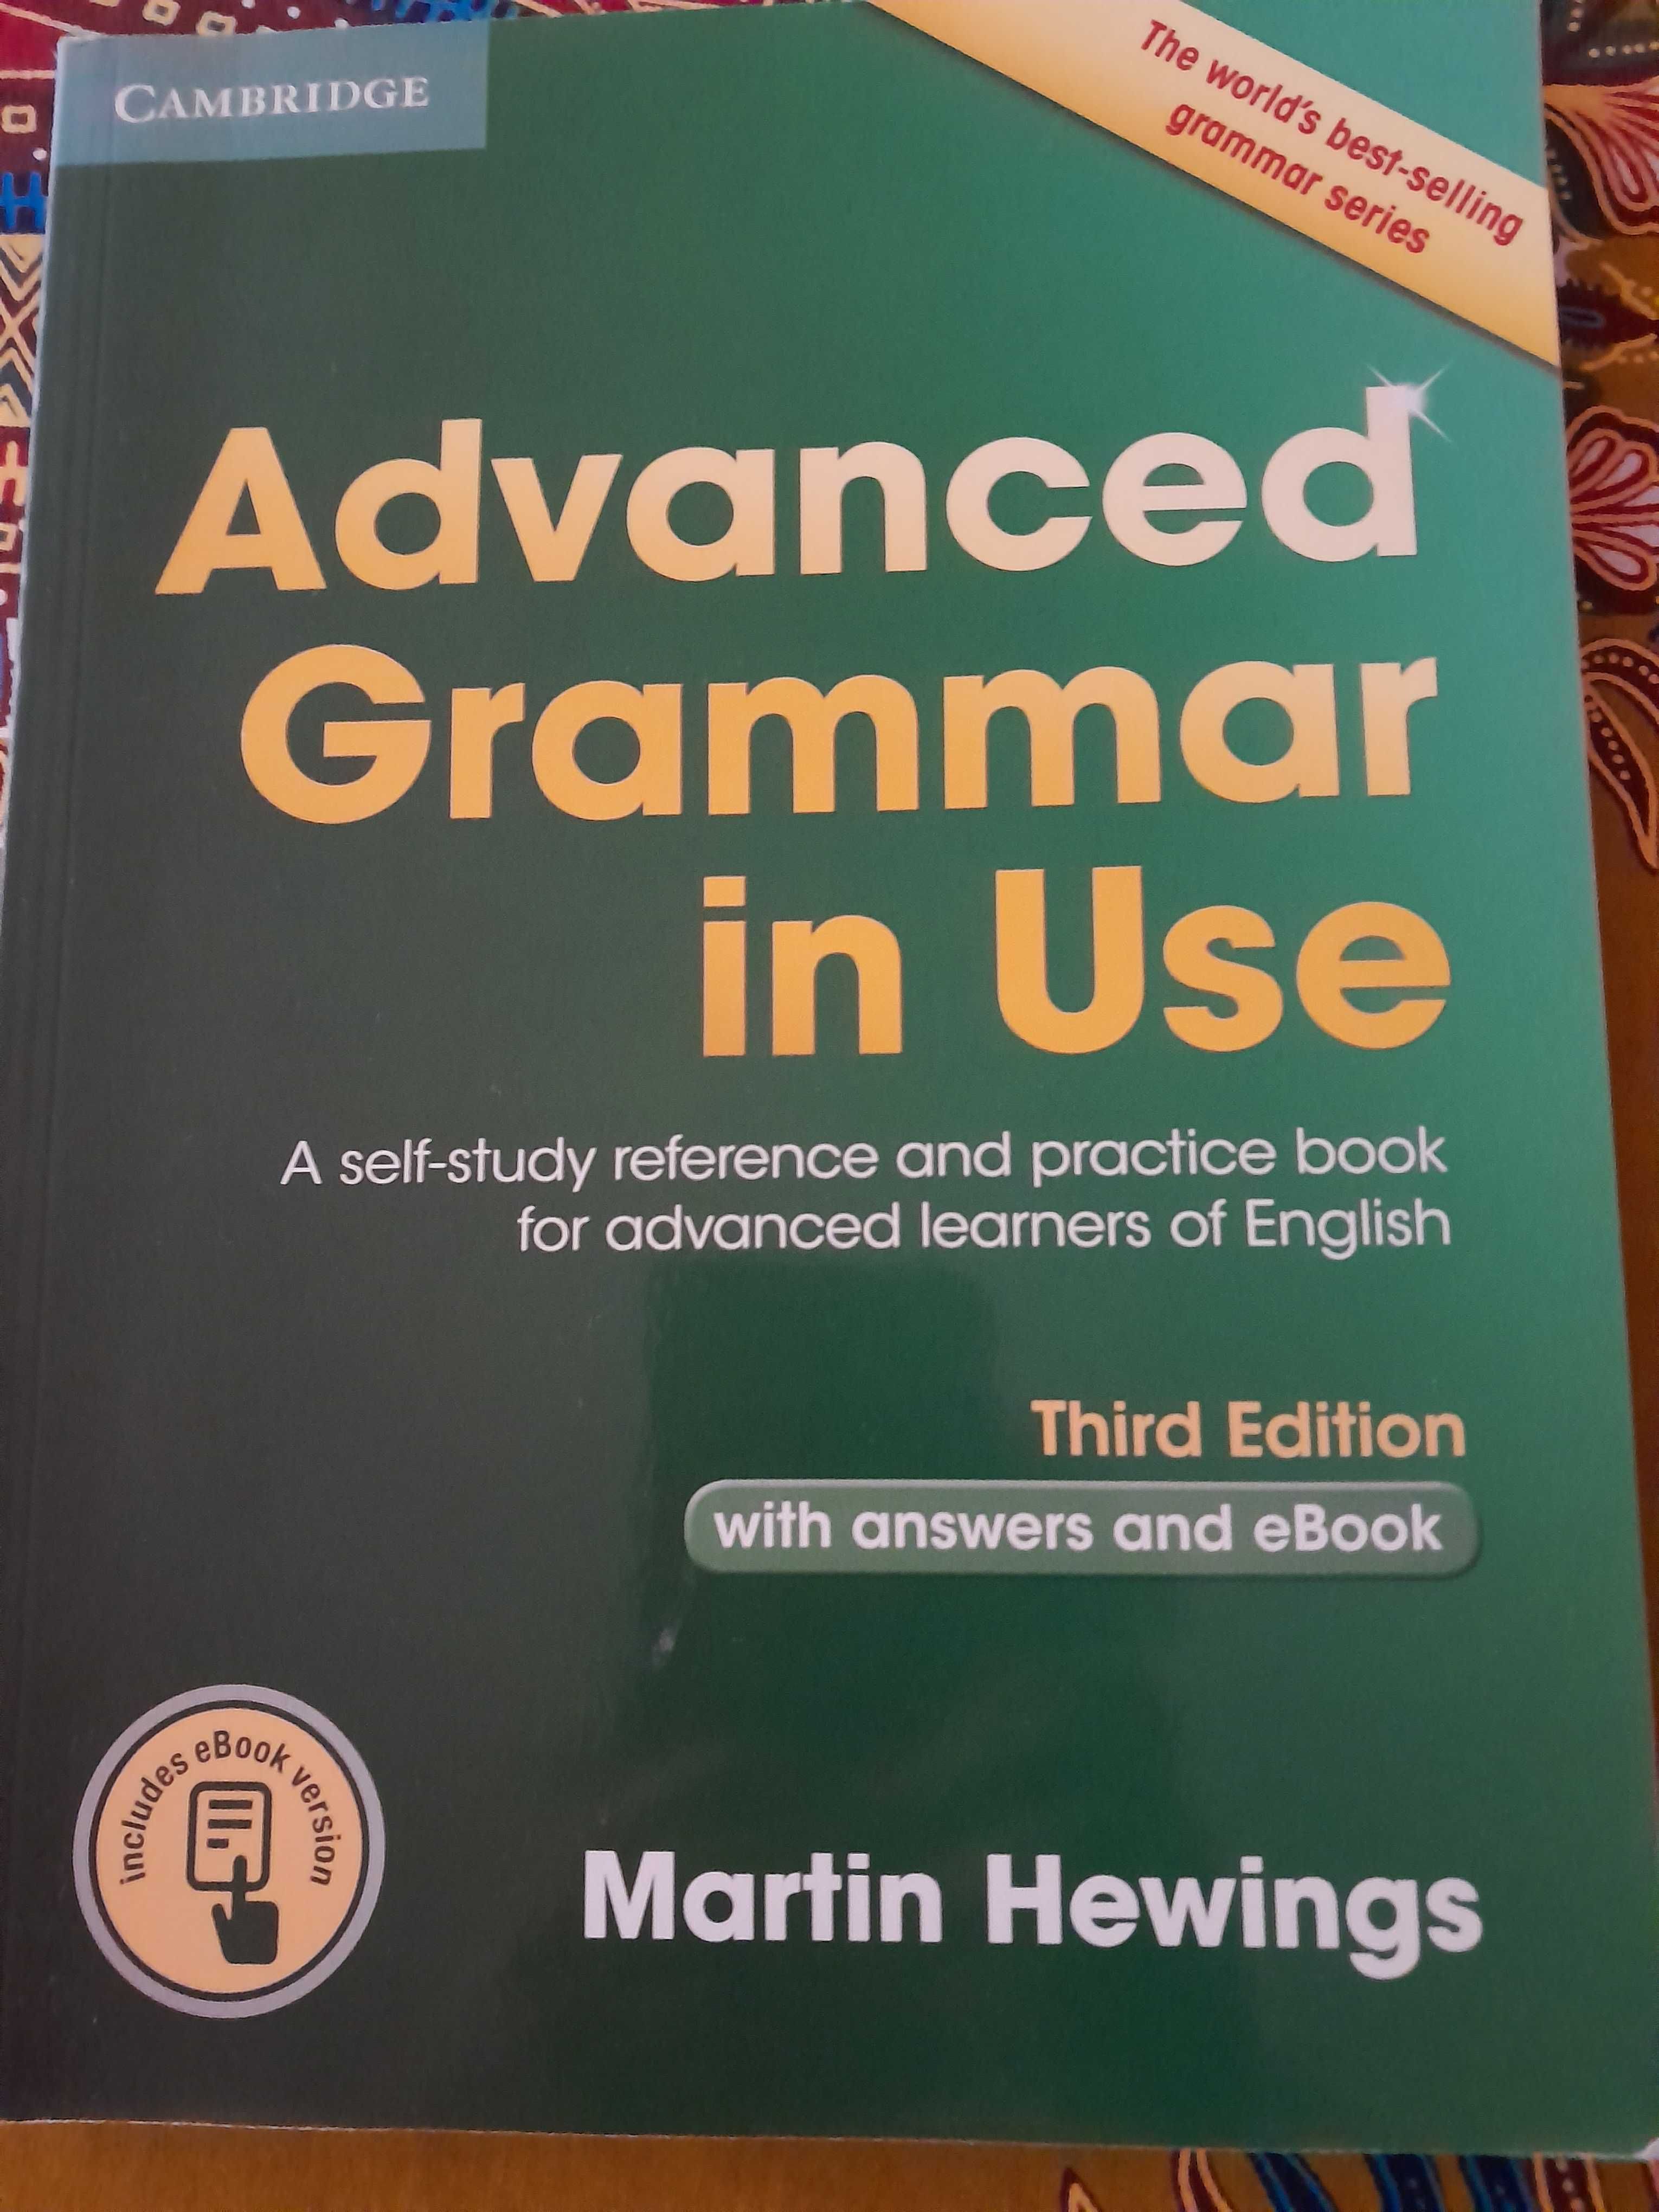 "Advanced Grammar in Use "